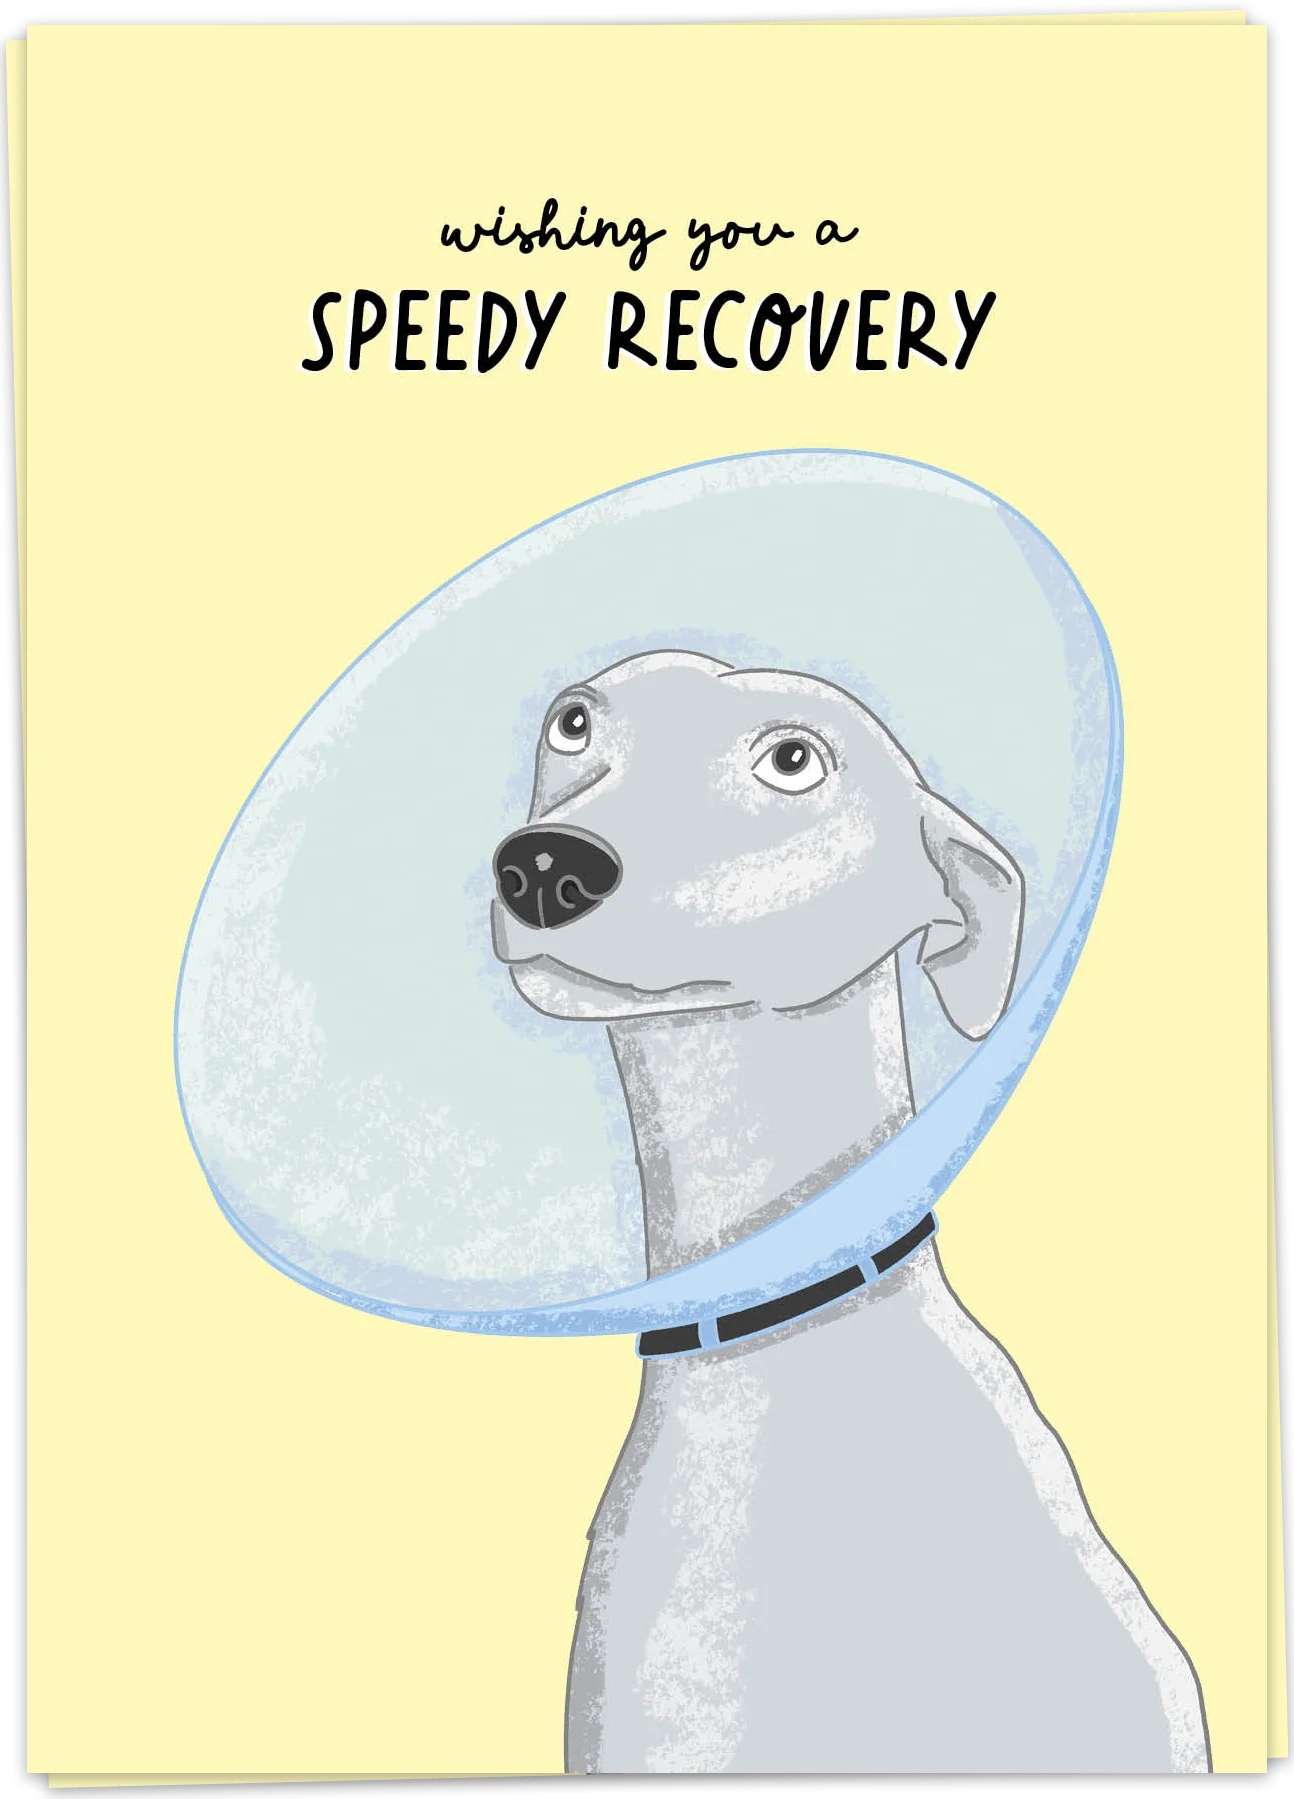 Speedy recovery